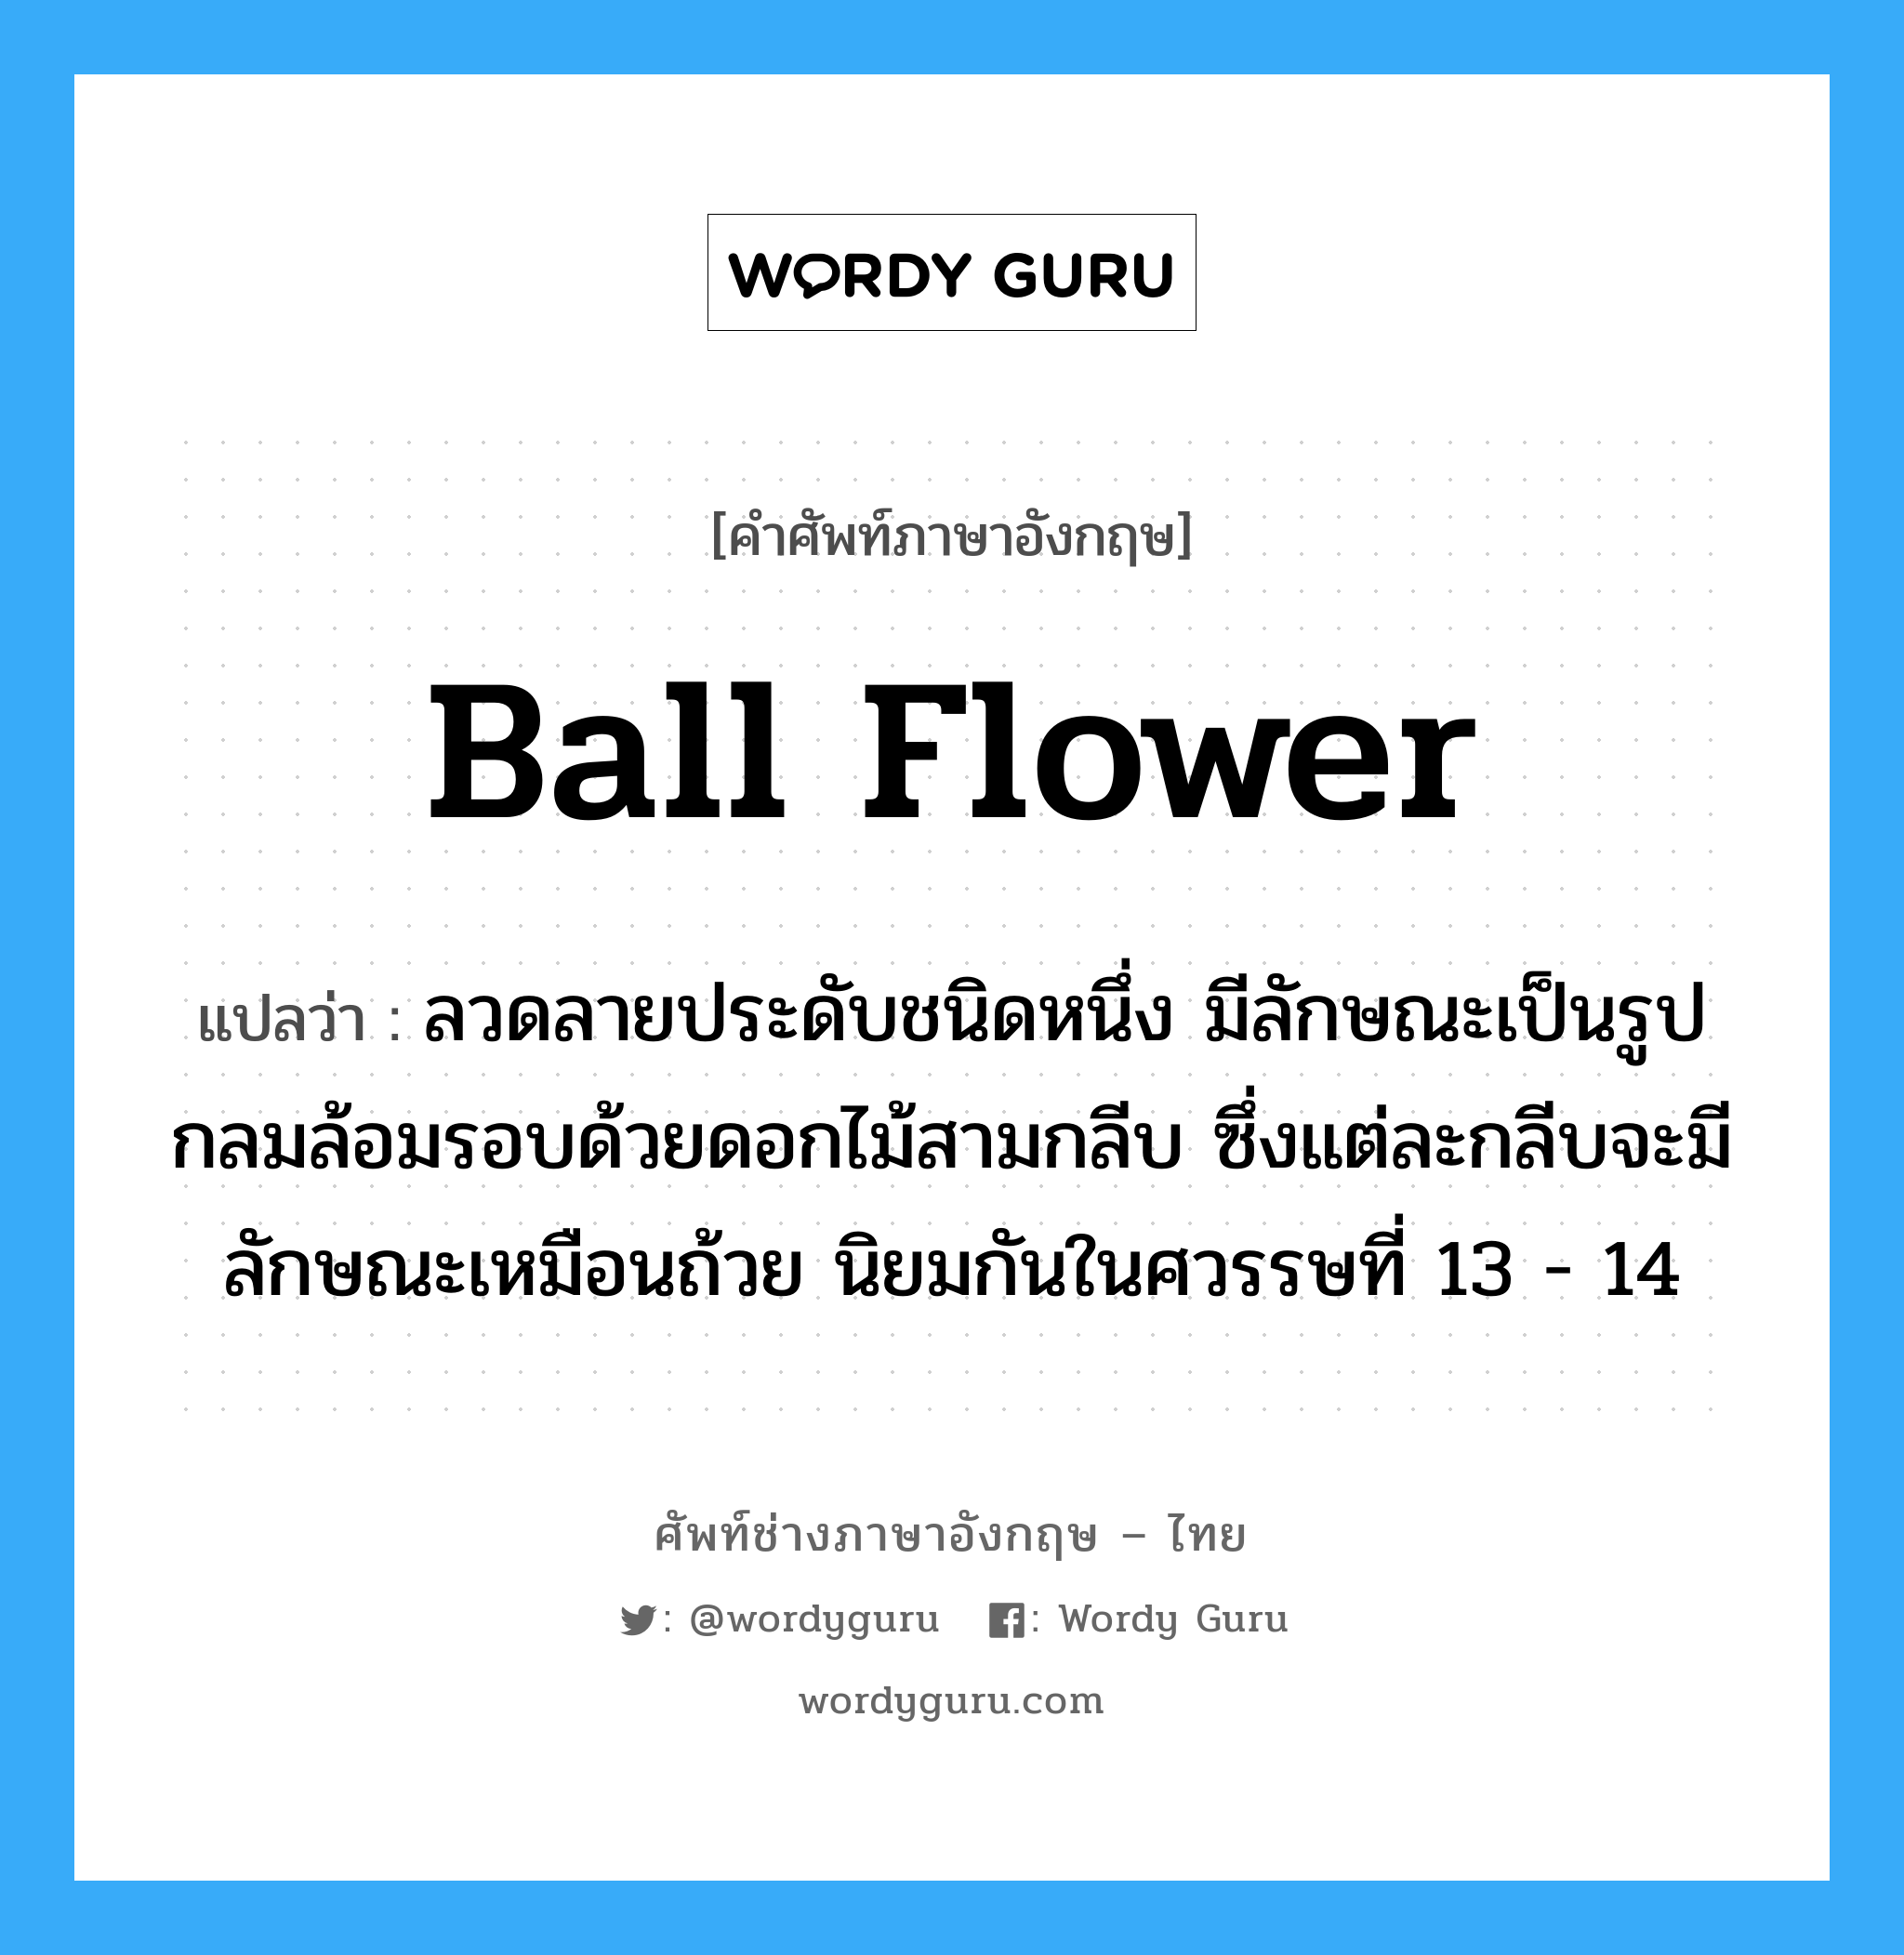 ball flower แปลว่า?, คำศัพท์ช่างภาษาอังกฤษ - ไทย ball flower คำศัพท์ภาษาอังกฤษ ball flower แปลว่า ลวดลายประดับชนิดหนึ่ง มีลักษณะเป็นรูปกลมล้อมรอบด้วยดอกไม้สามกลีบ ซึ่งแต่ละกลีบจะมีลักษณะเหมือนถ้วย นิยมกันในศวรรษที่ 13 - 14